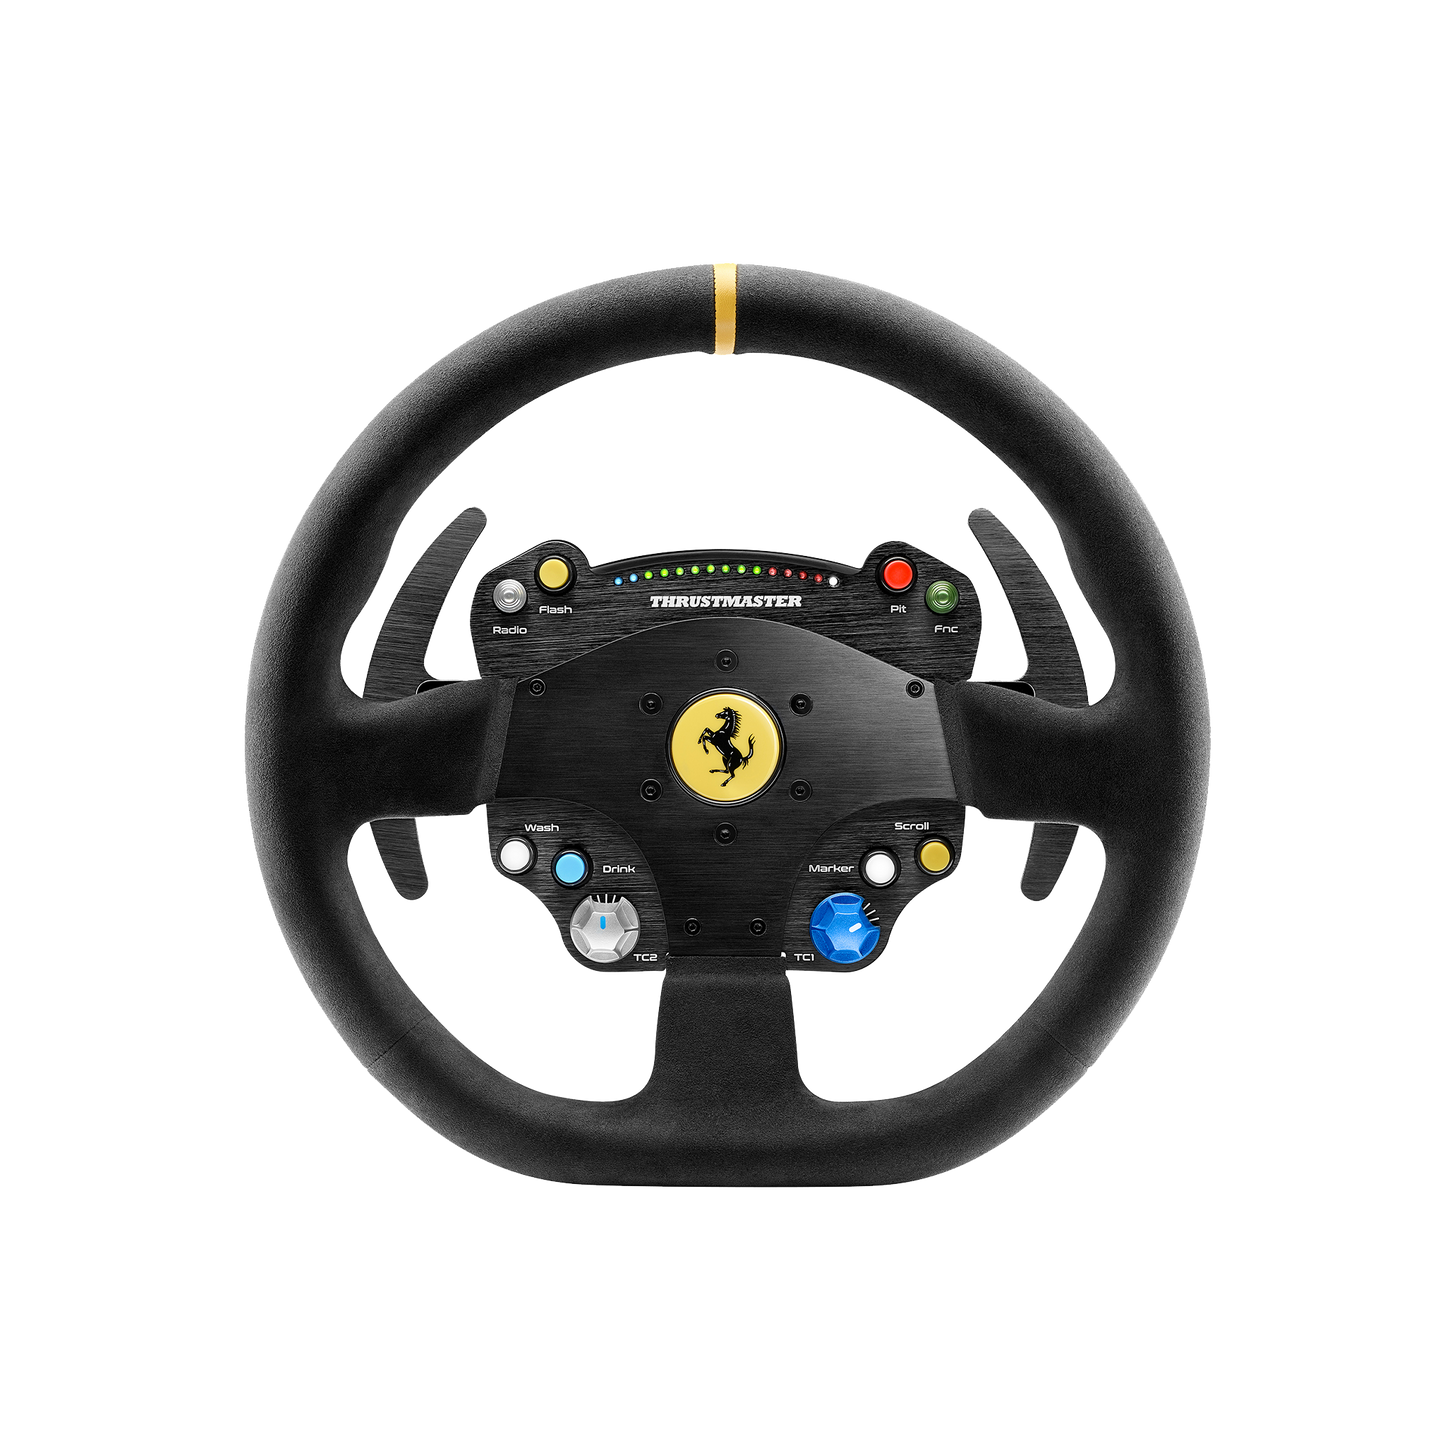 TSPC Racer F488 Challenge Edition _SimMontreal